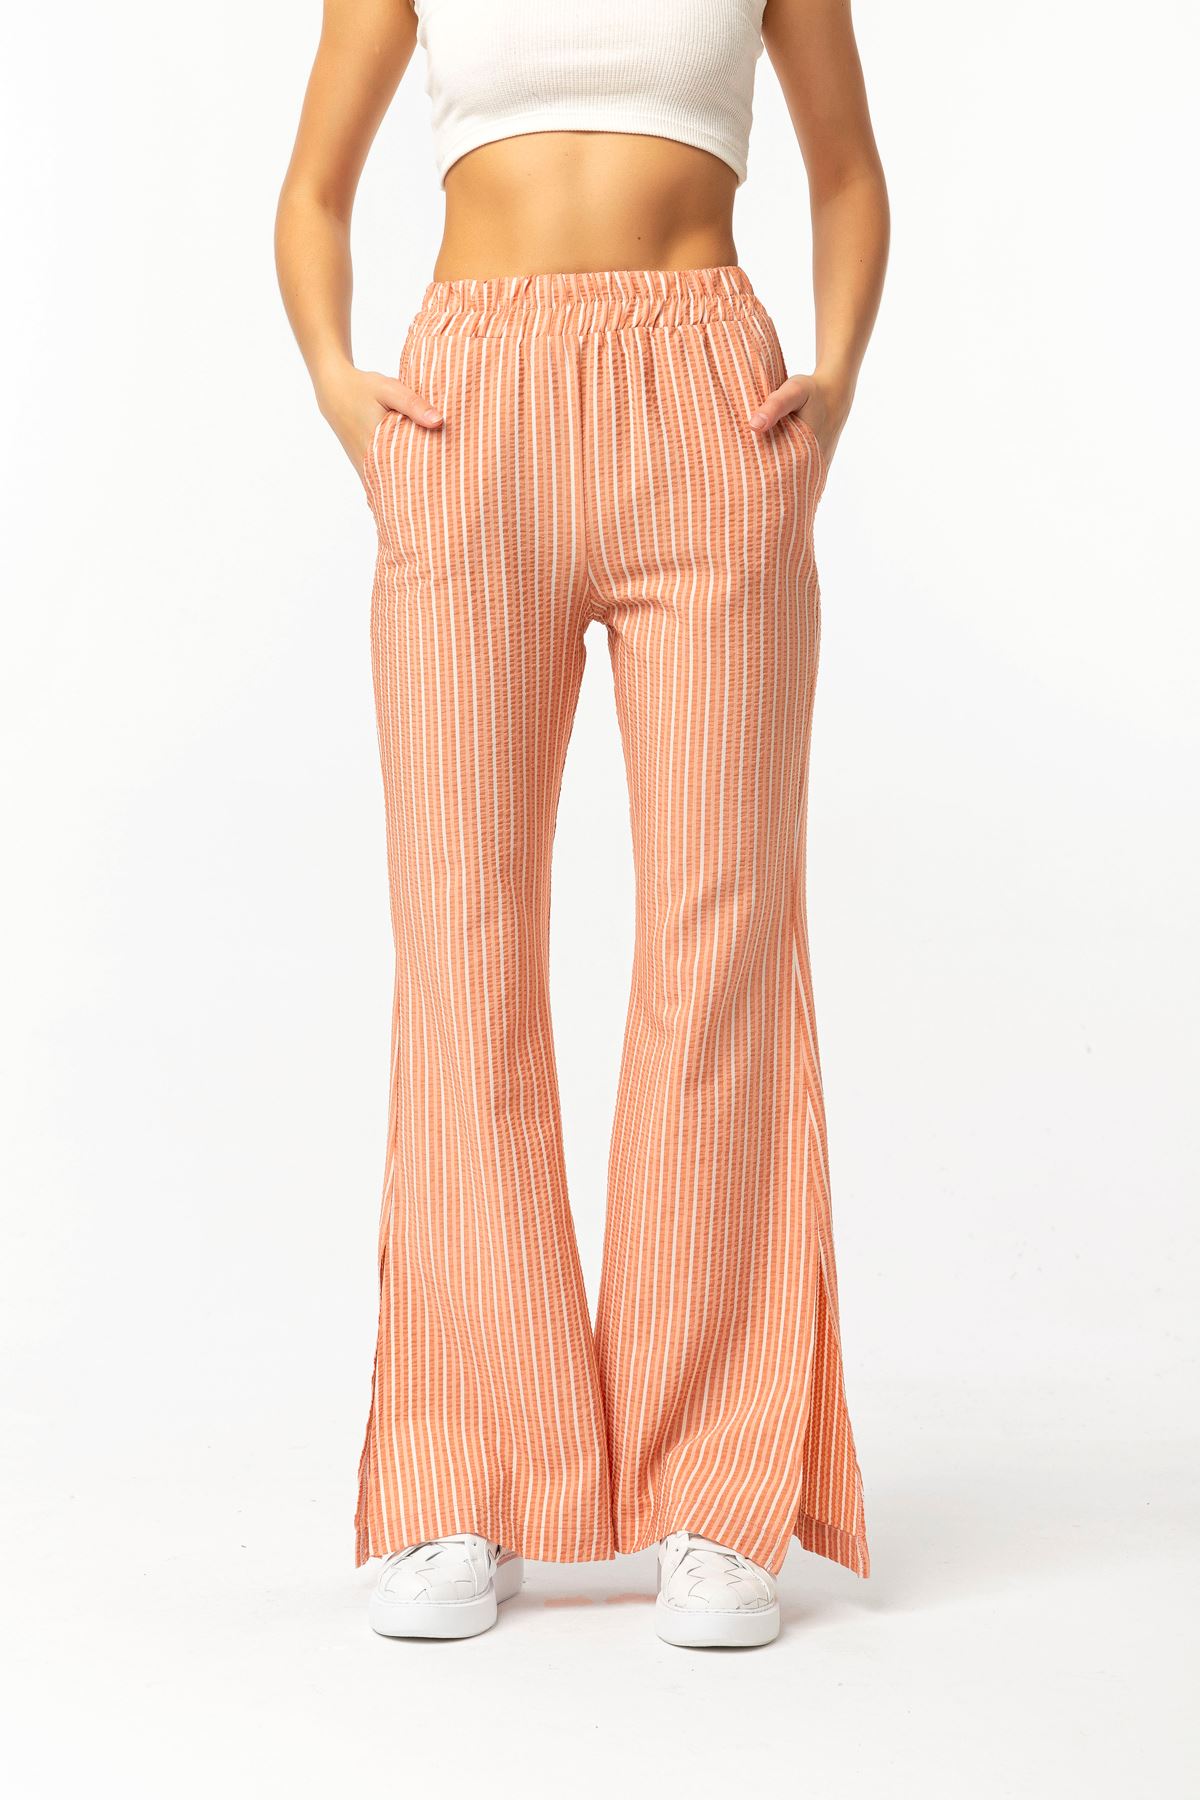 Gofre Fabric Long Striped Slit Women'S Trouser - Salmon